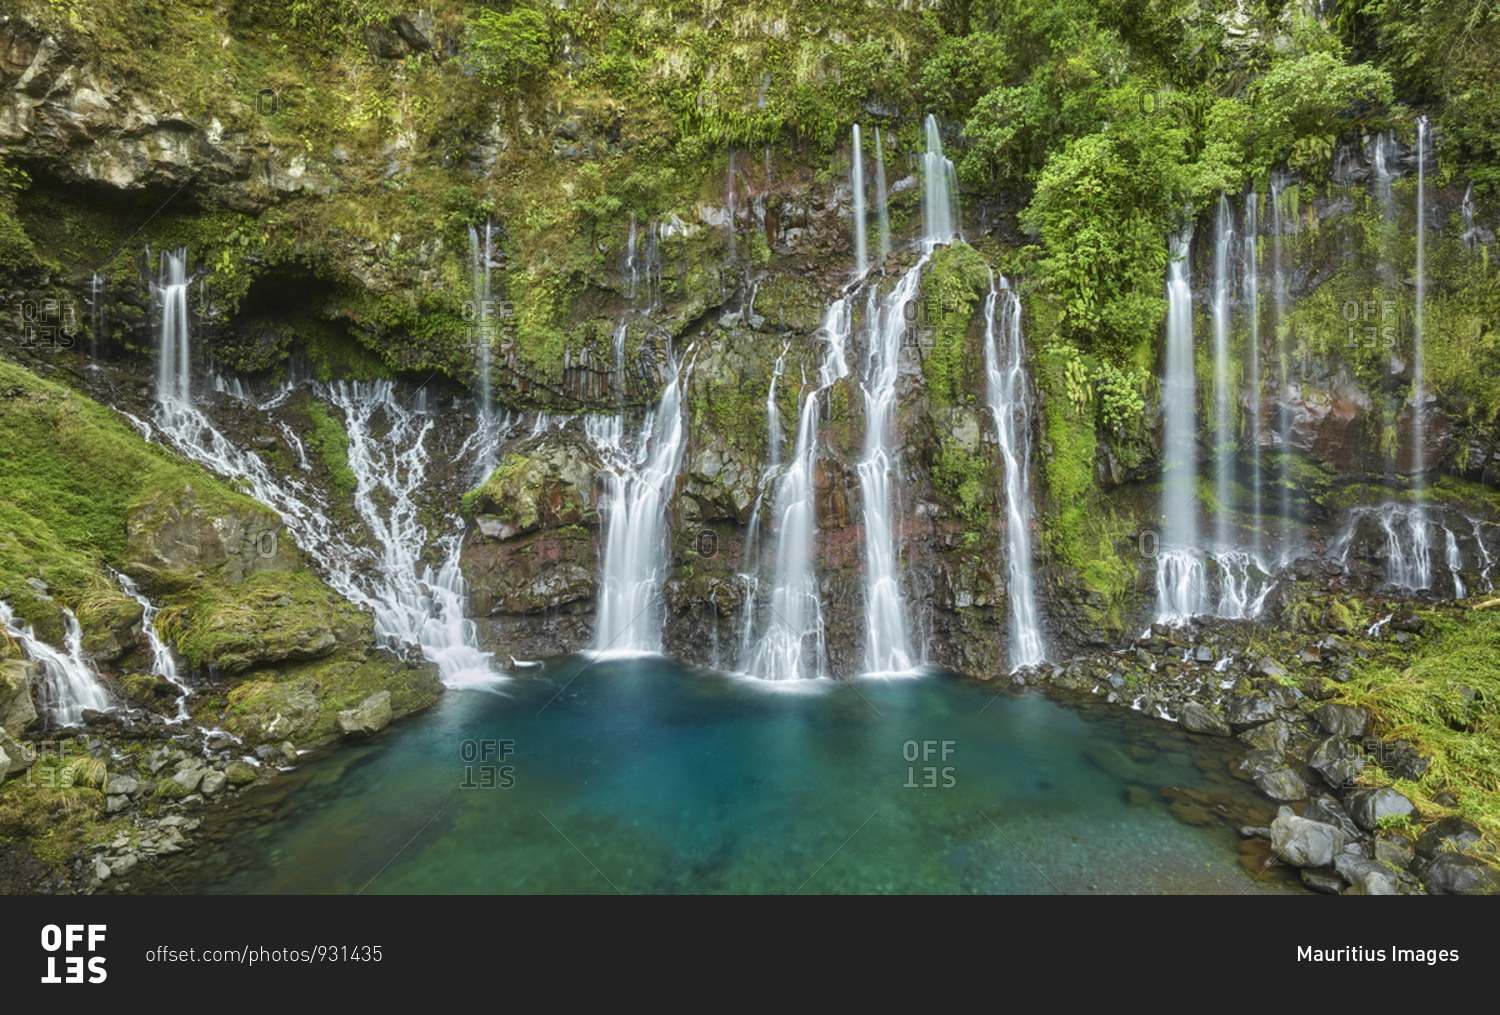 Waterfall Cascade de la Grande Ravine, Langevin, Reunion, France